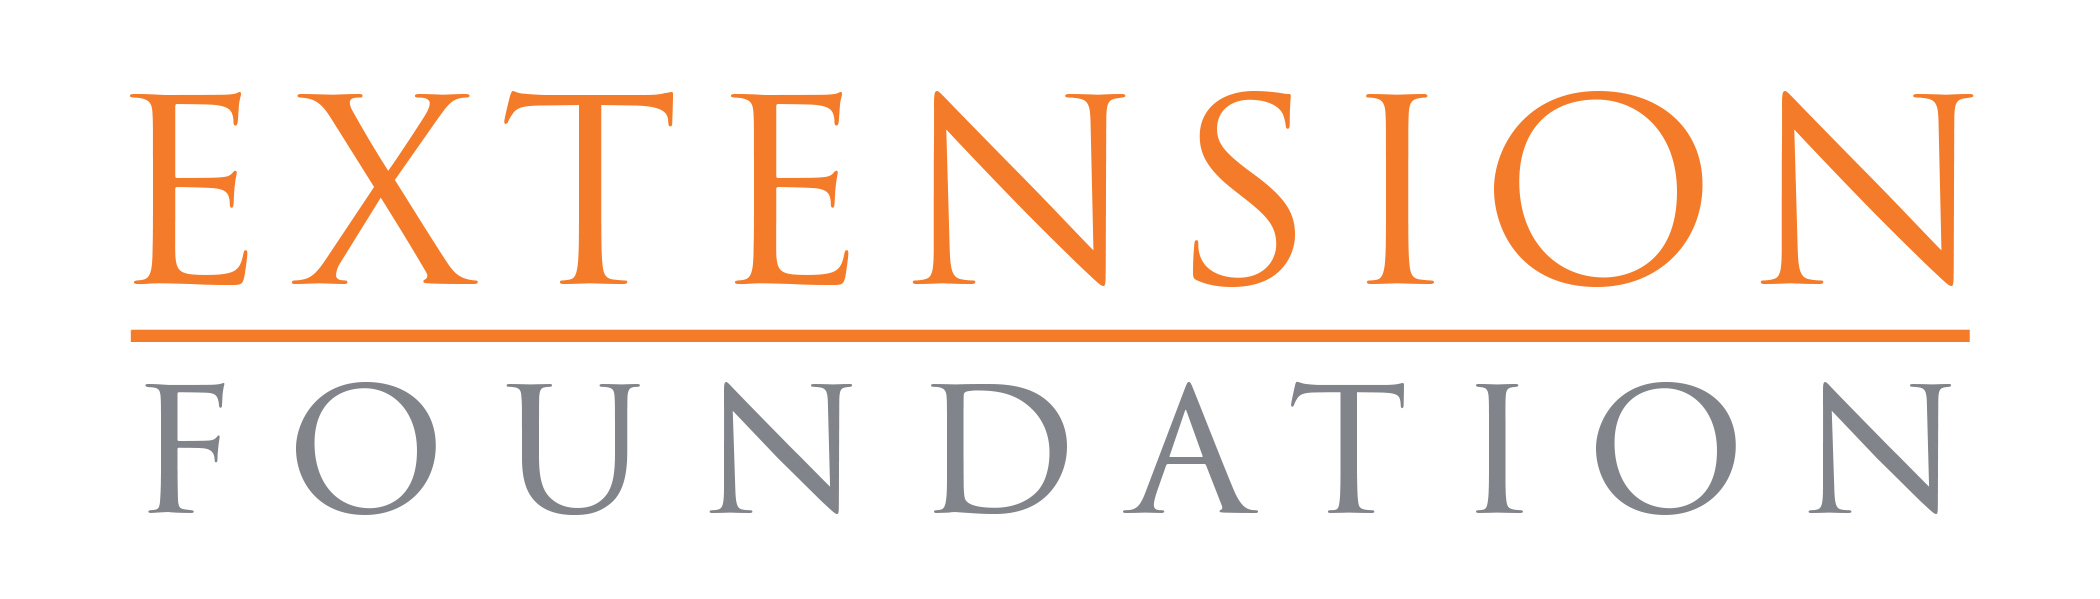 Extension Foundation logo